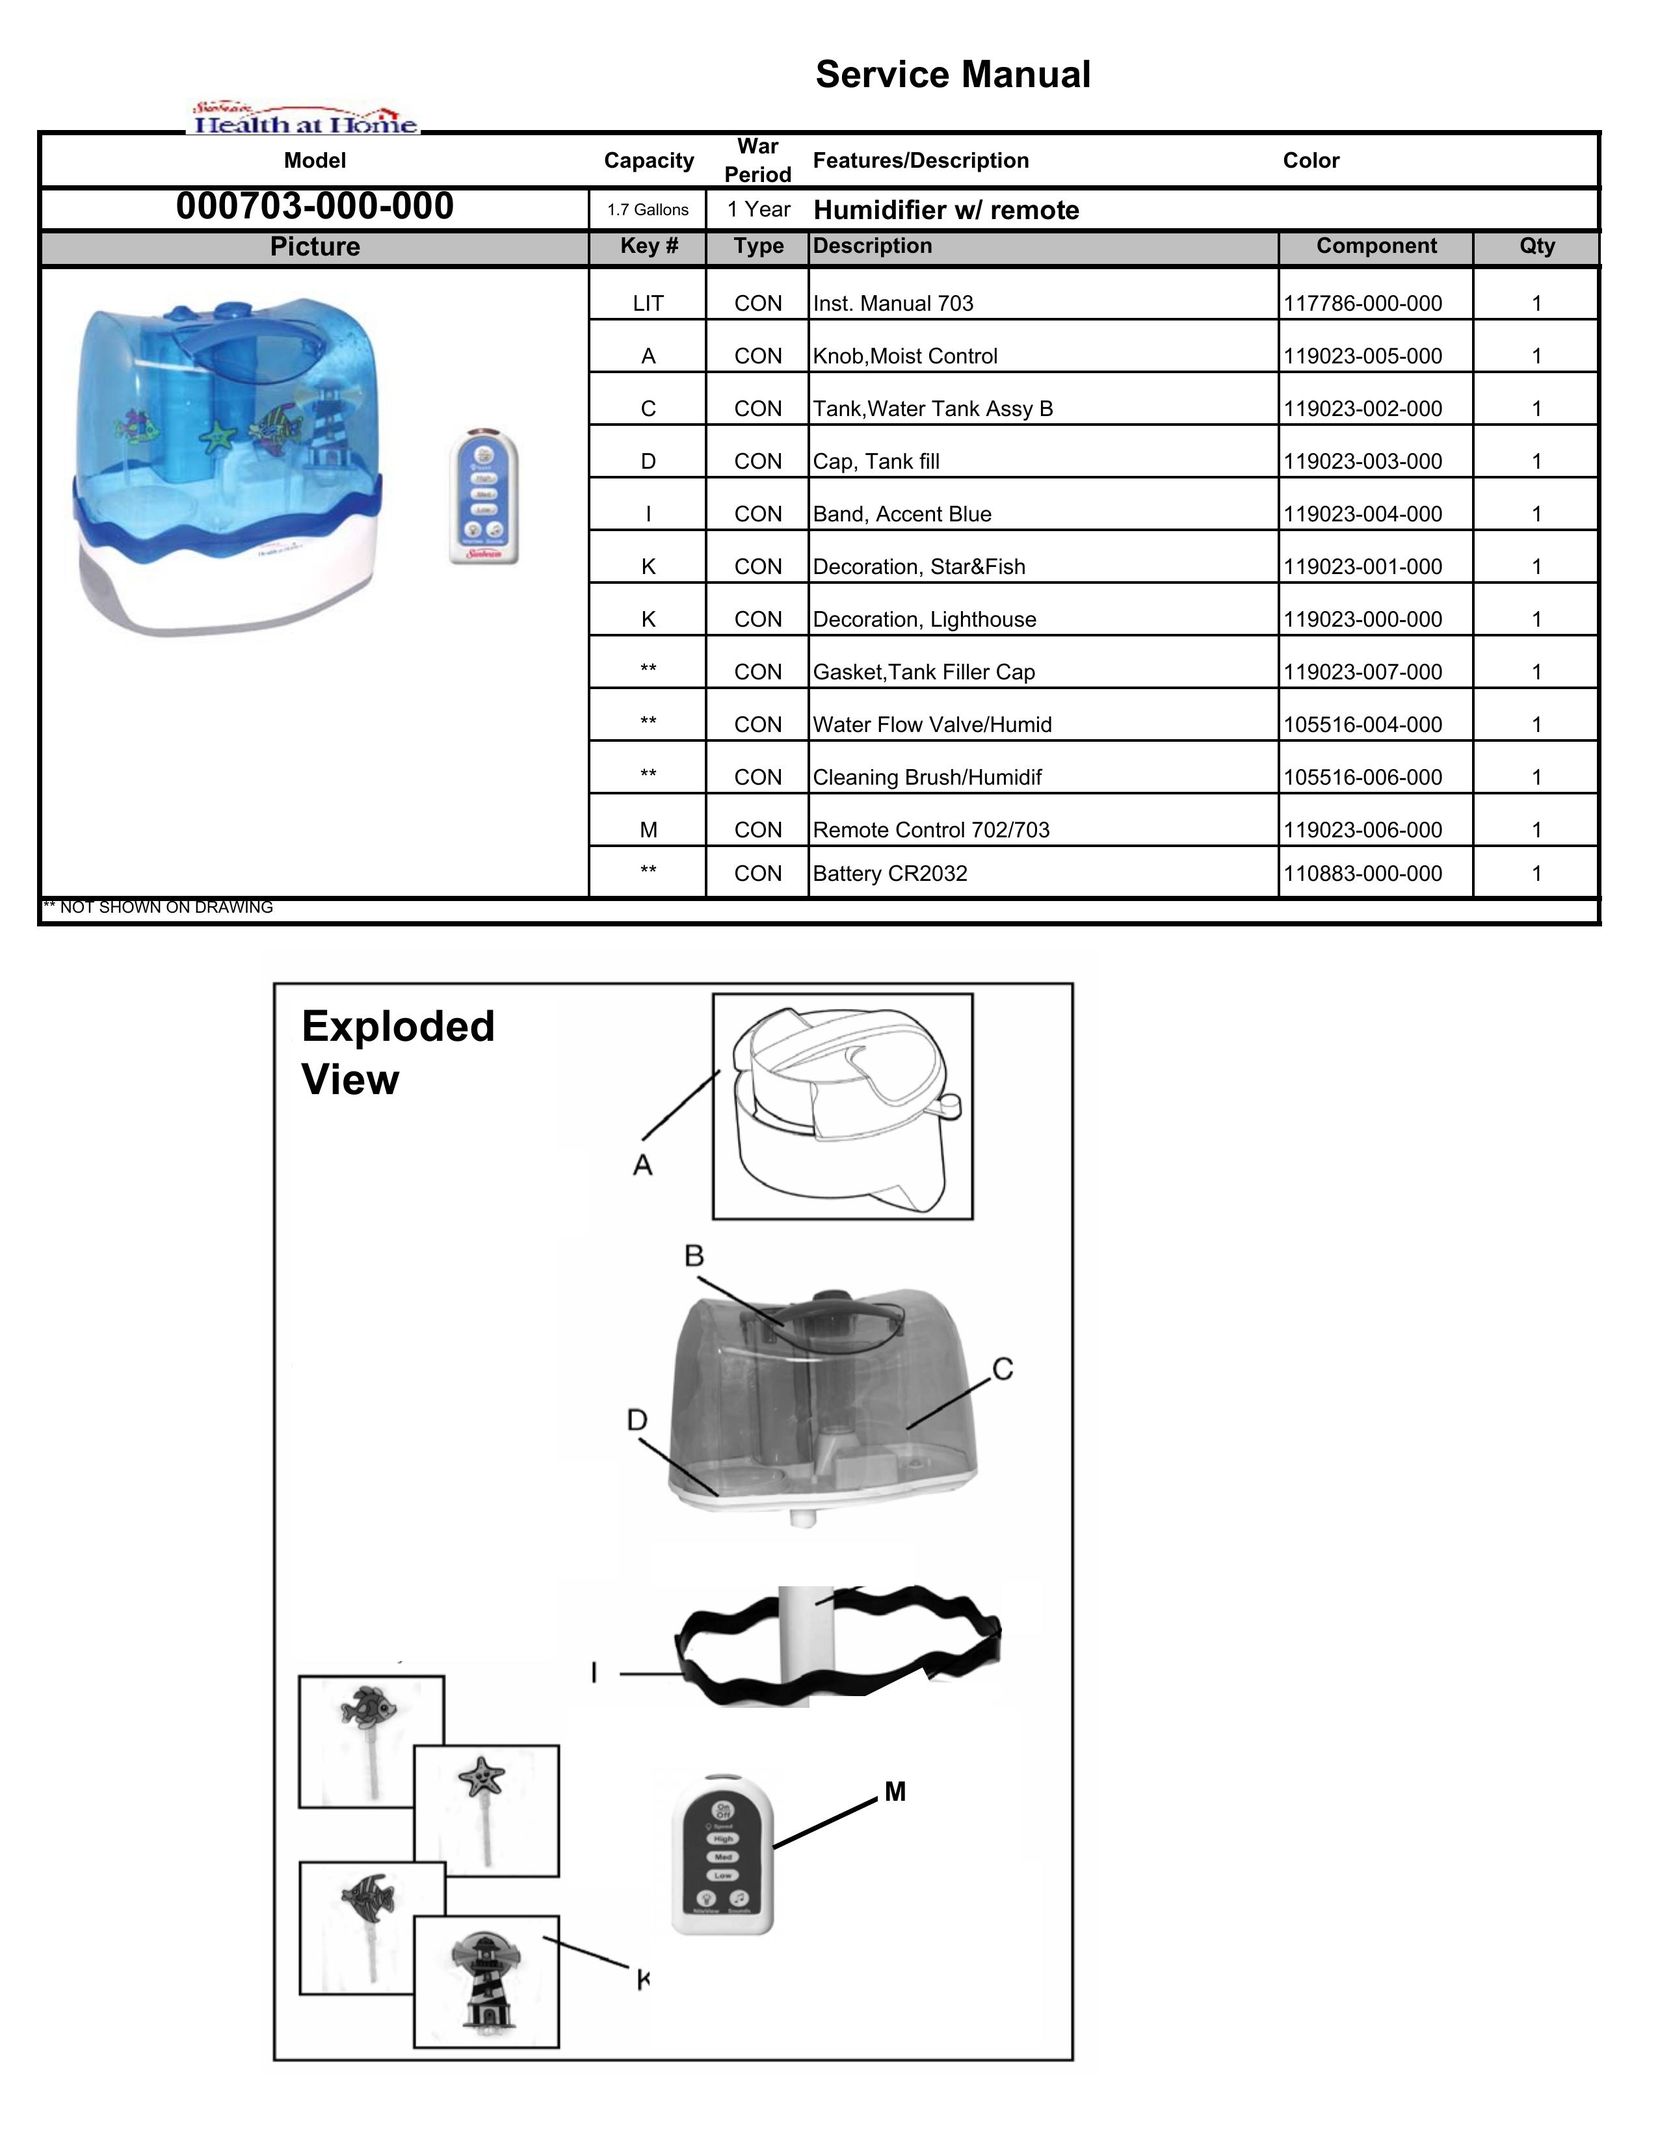 Heath Zenith 000703-000-000 Dehumidifier User Manual